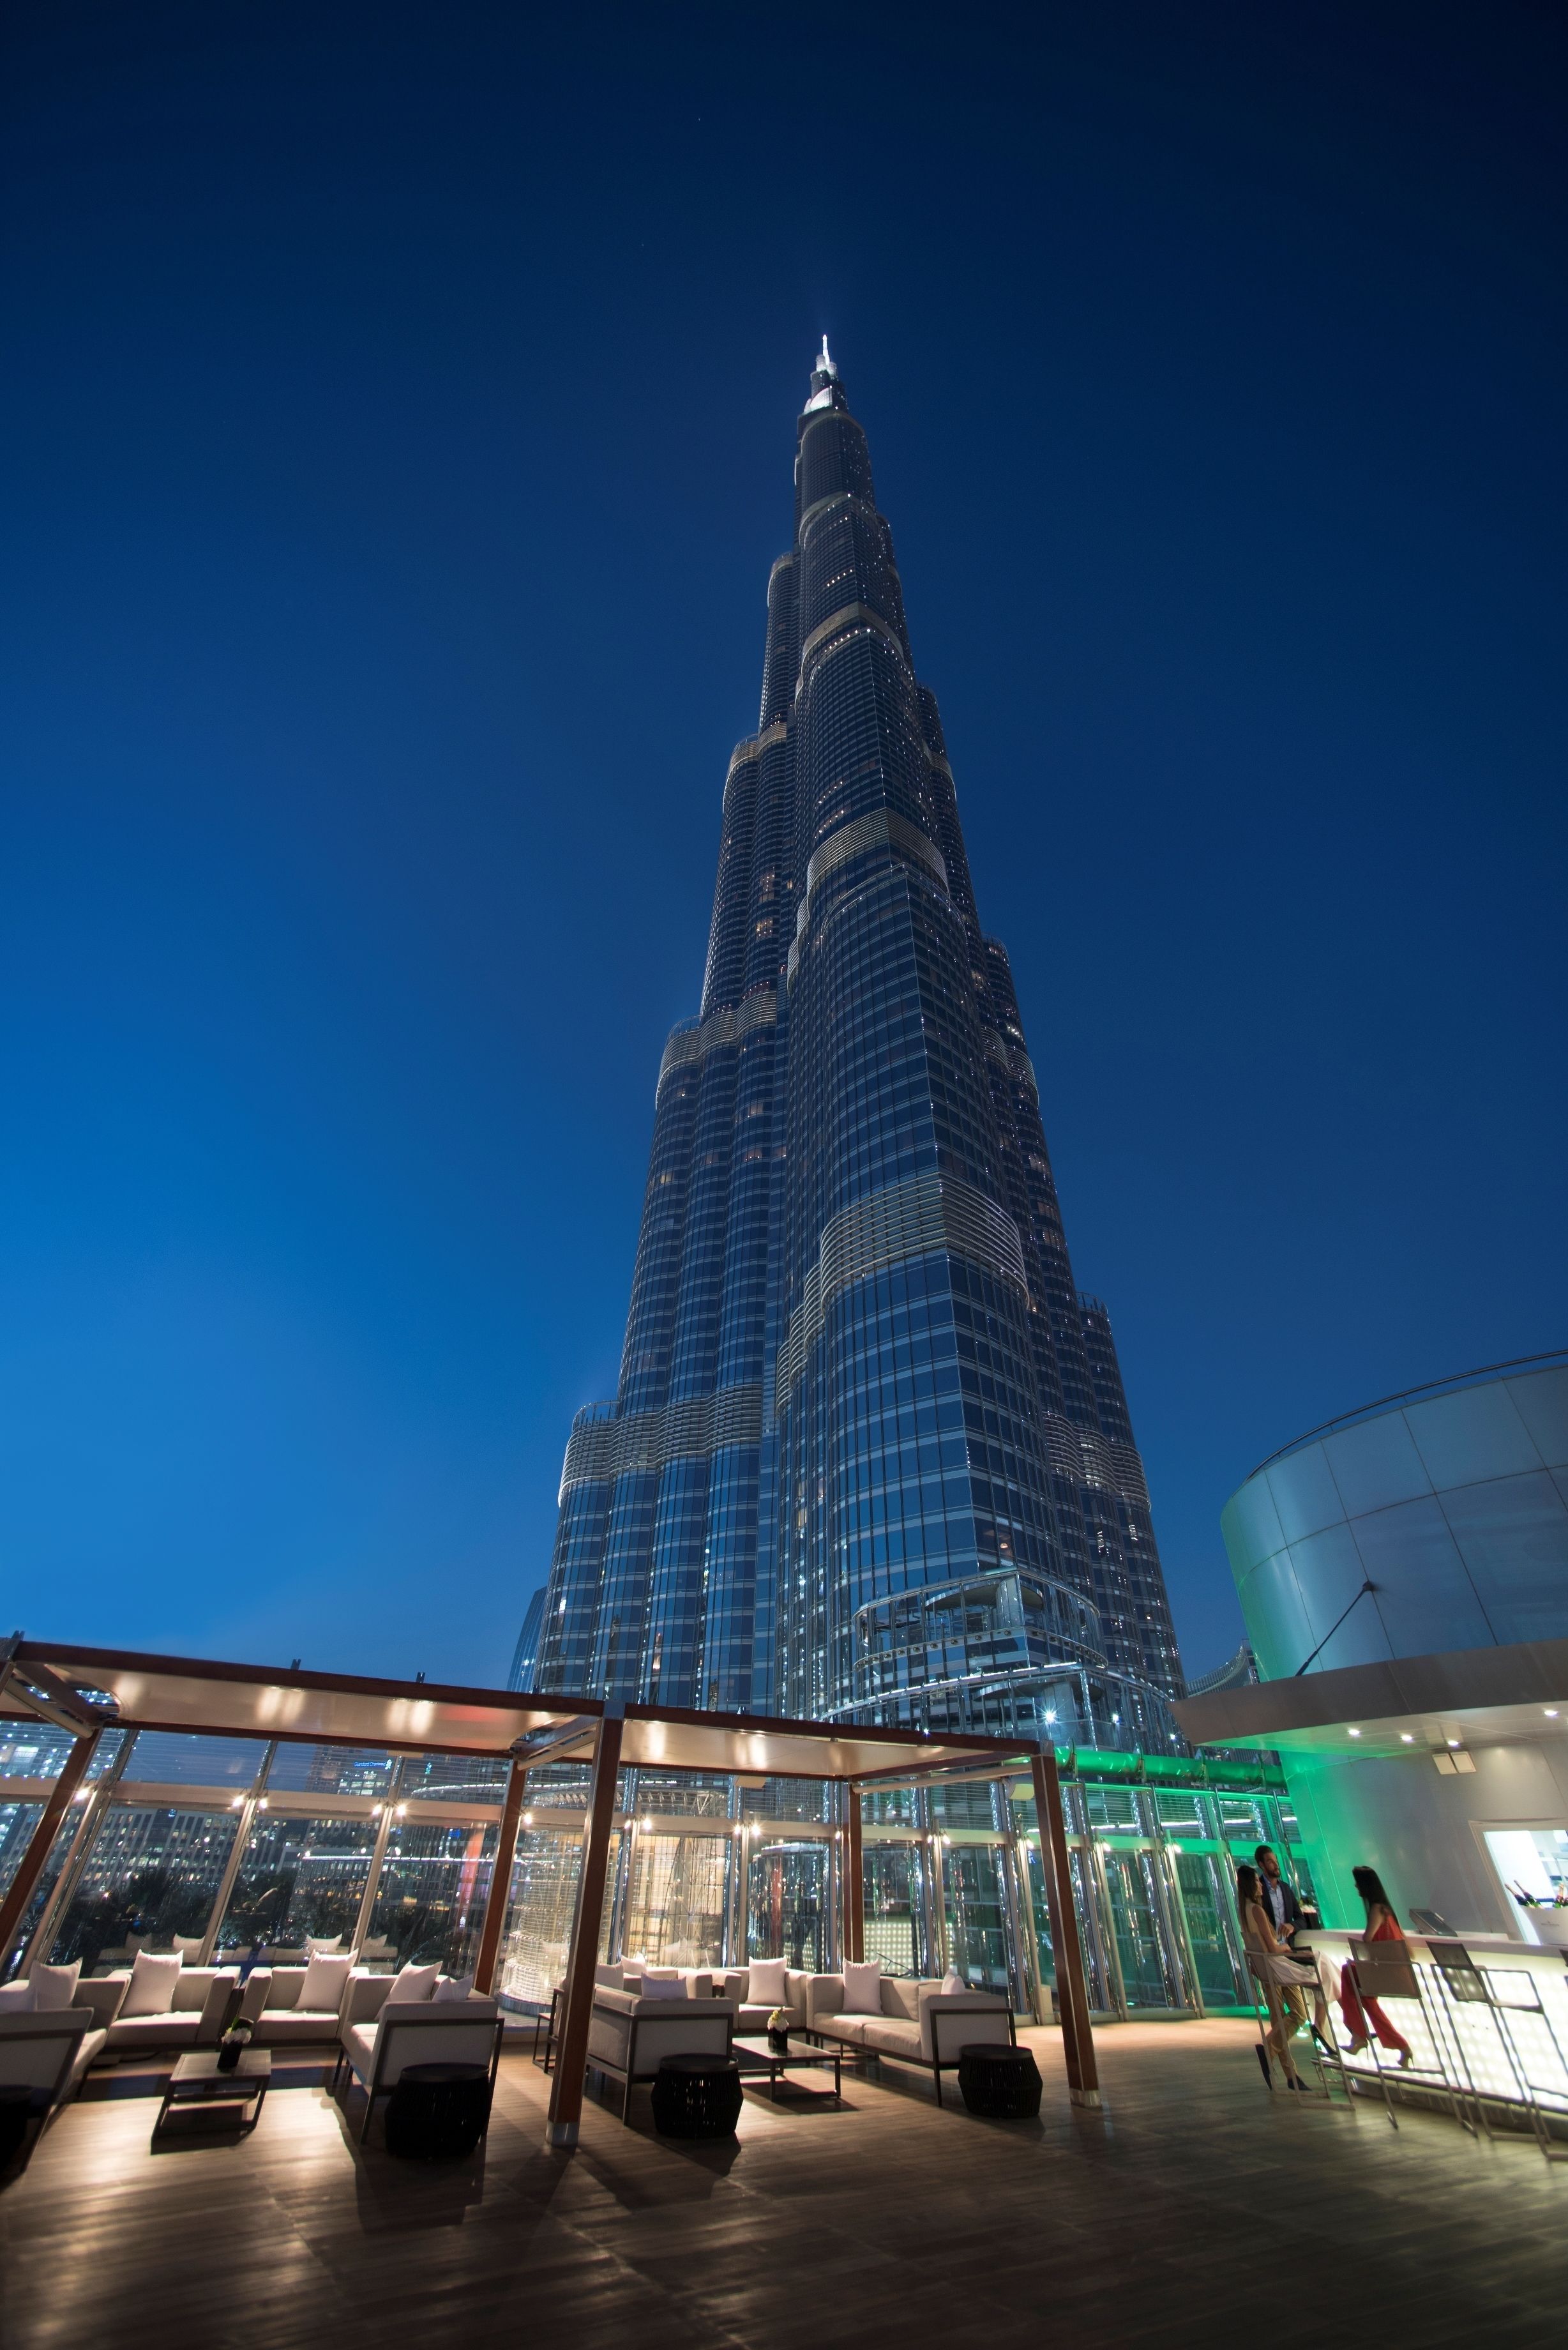 Burj Khalifa 124 125 Floor Observation Deck Tickets